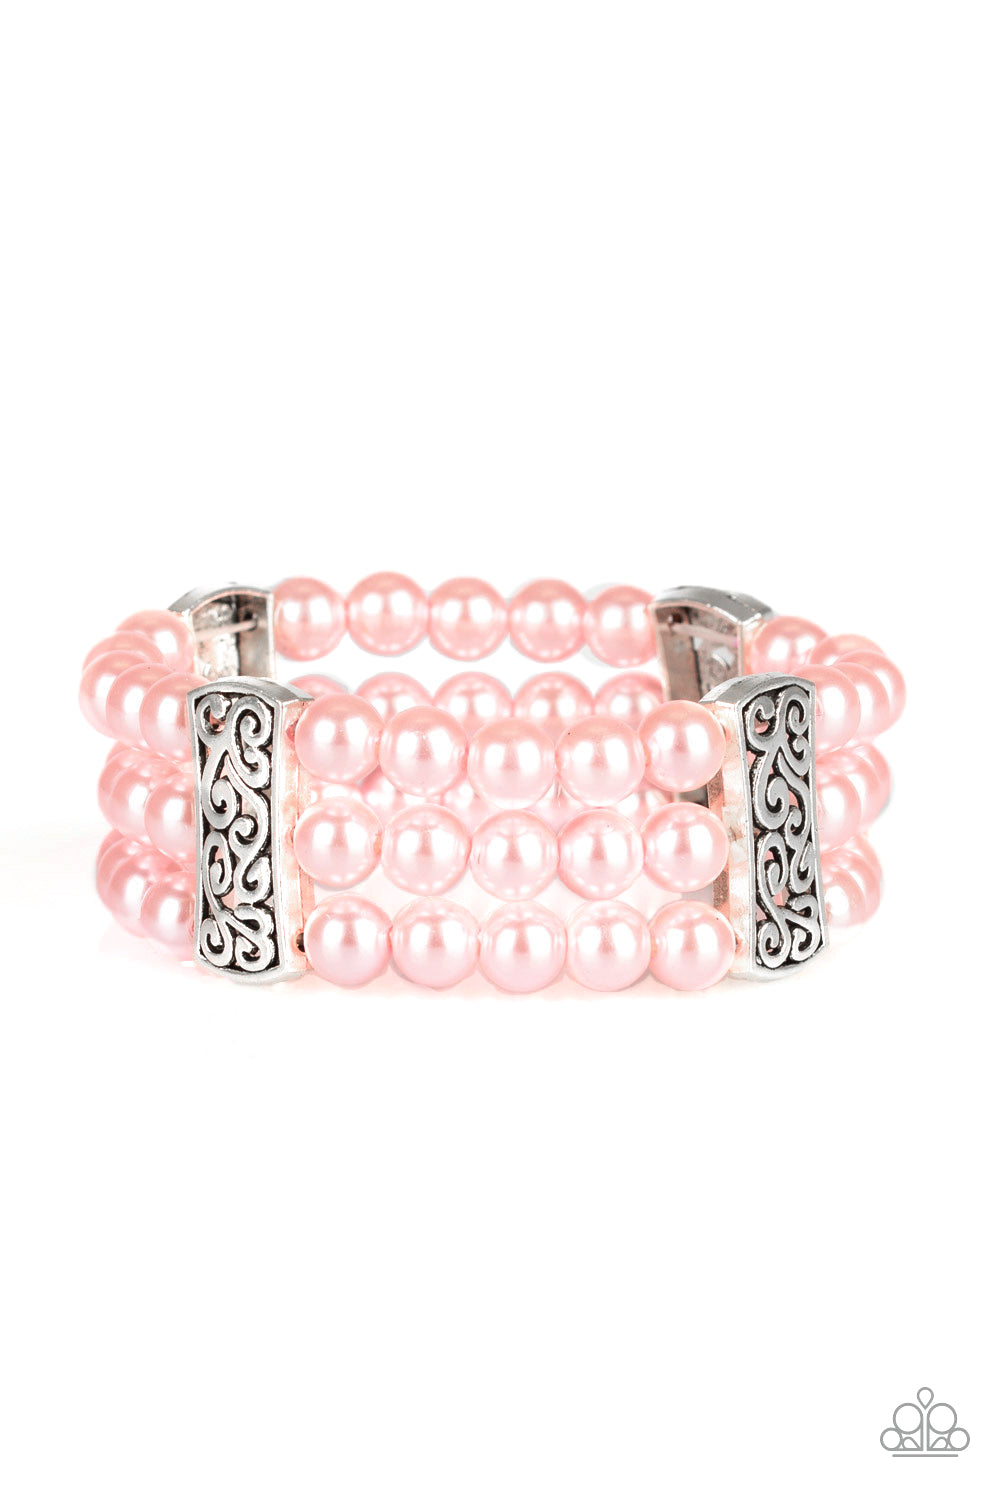 Ritzy Ritz Pink - VJ Bedazzled Jewelry